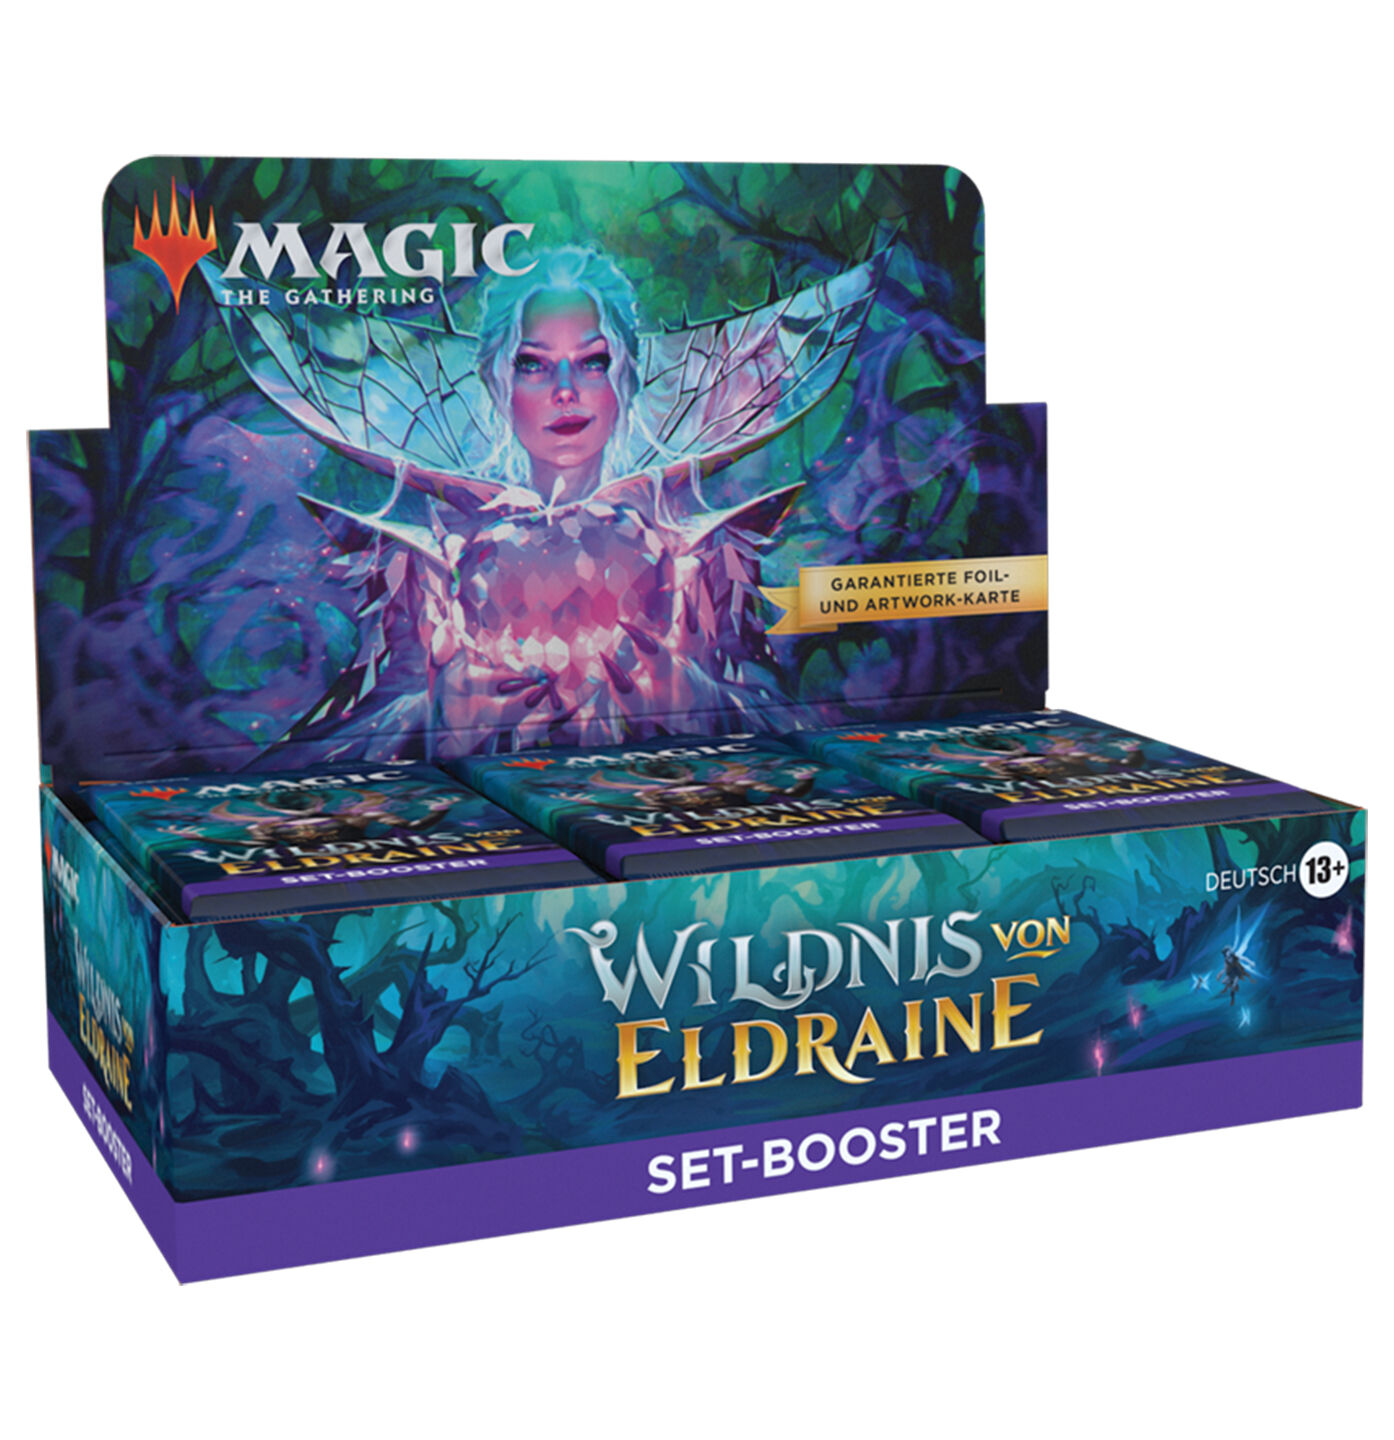 Wilds of Eldraine Set Booster Display - Magic the Gathering - EN